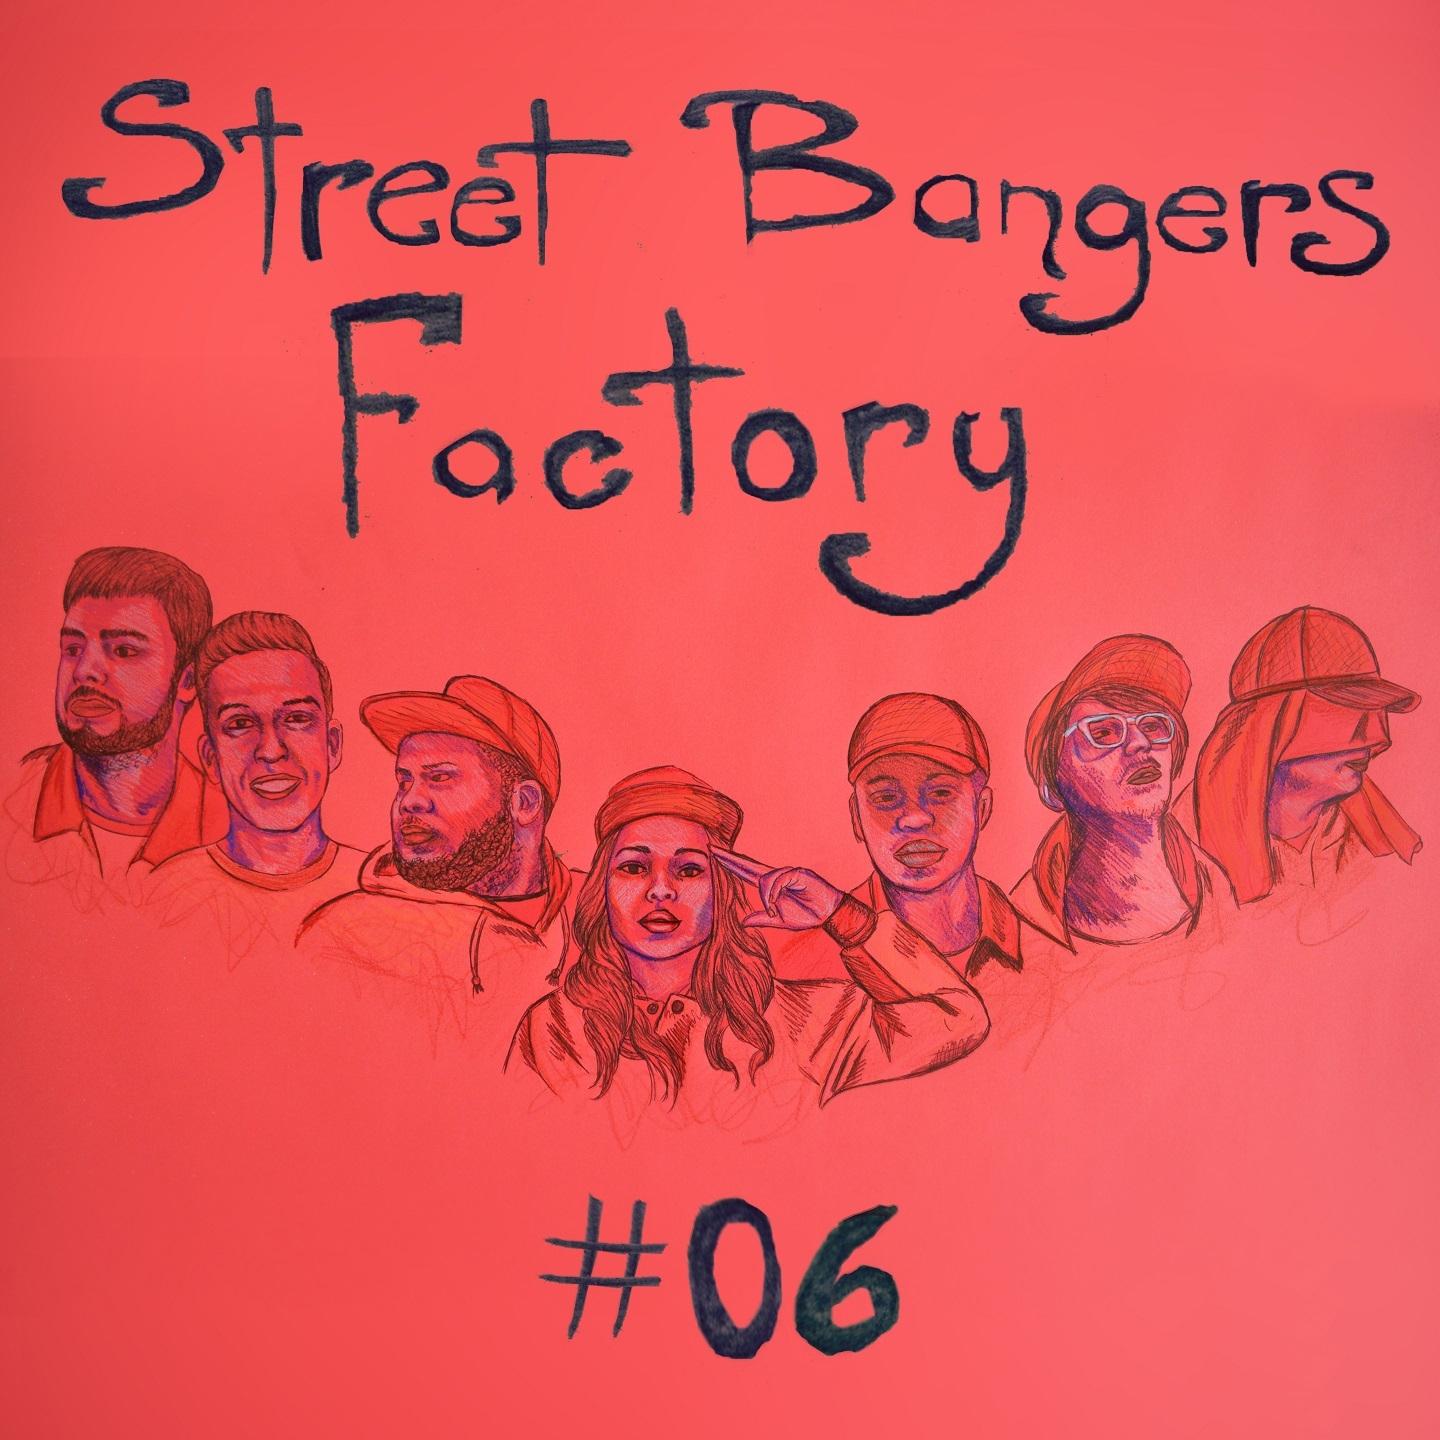 Street Bangers Factory 06